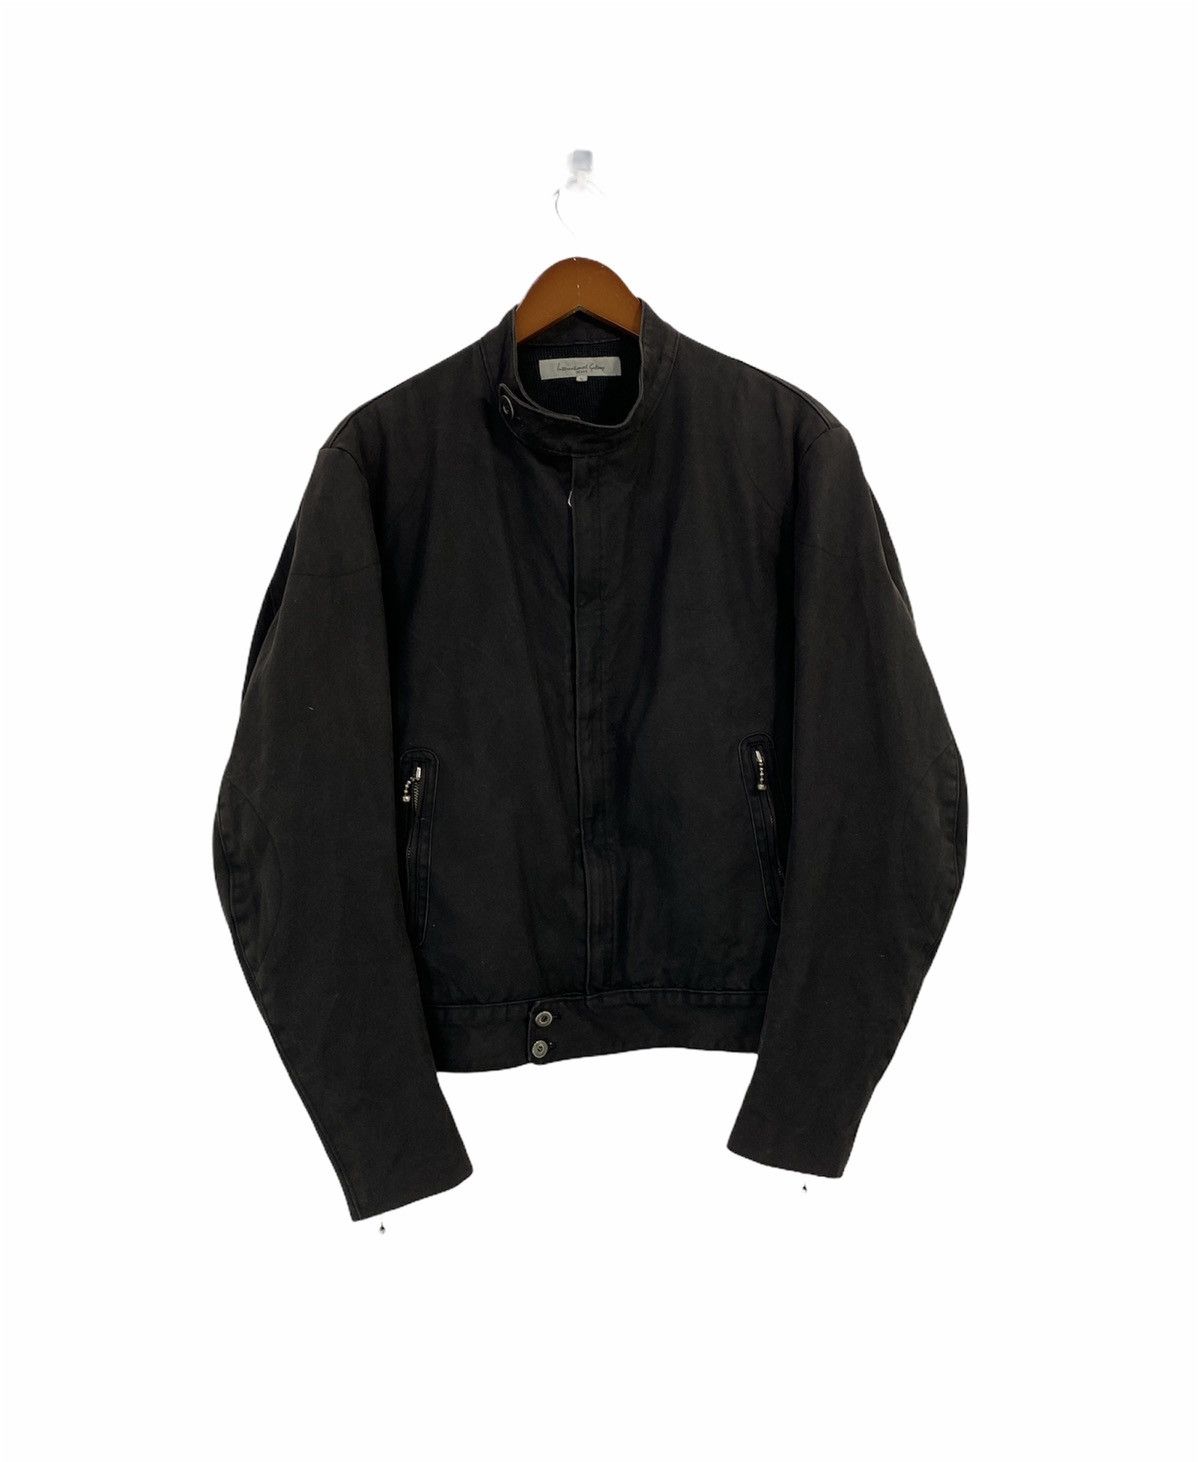 Beams International Gallery Biker Jacket Design Black Color - 1